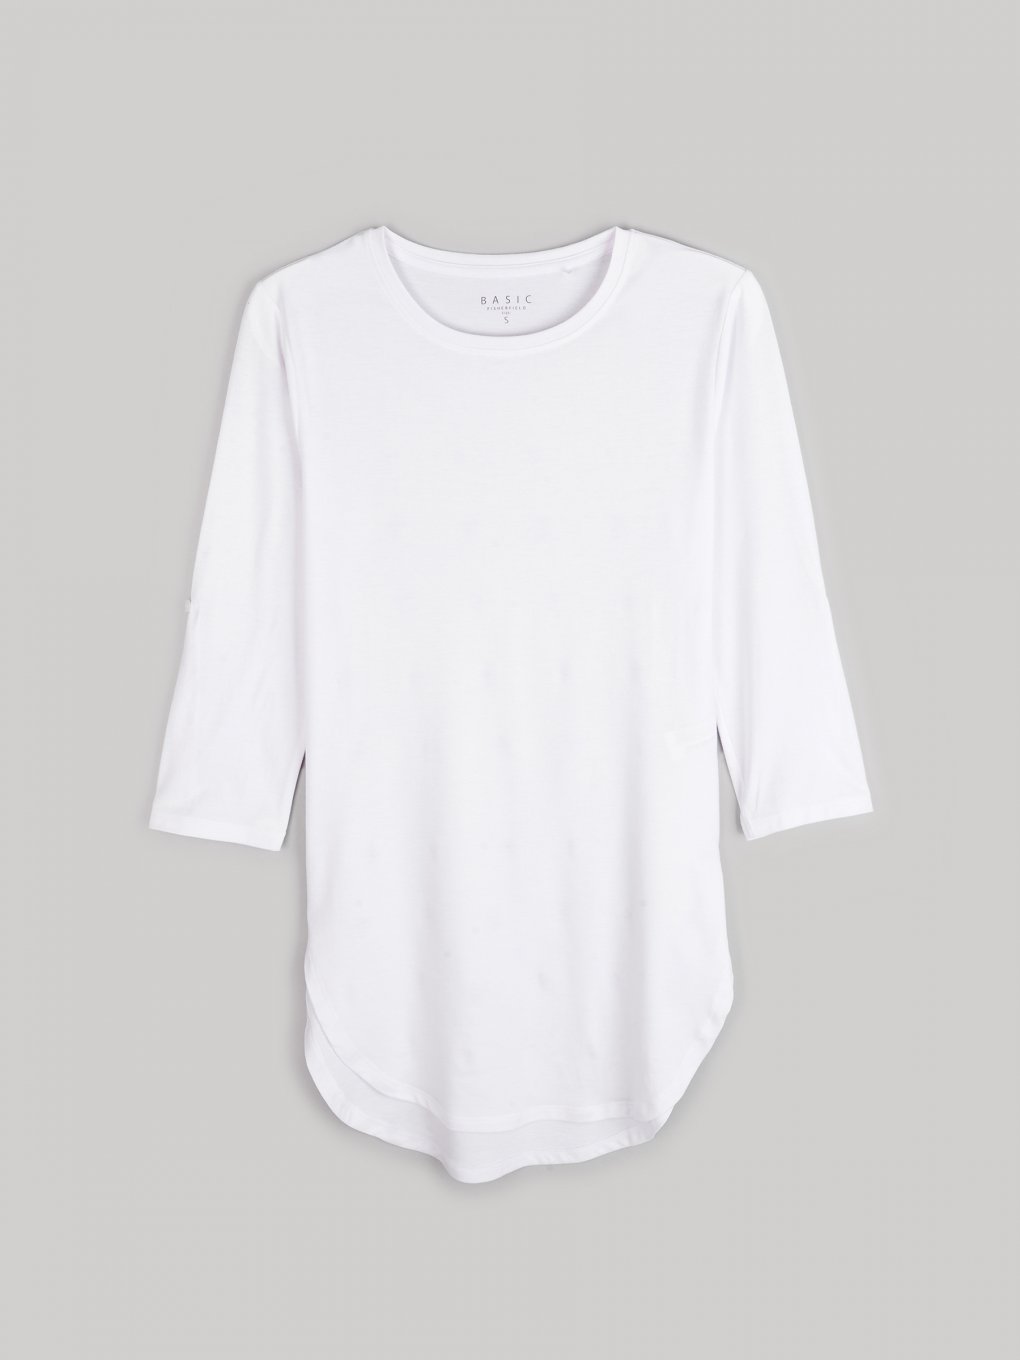 Basic longline 3/4 sleeve t-shirt